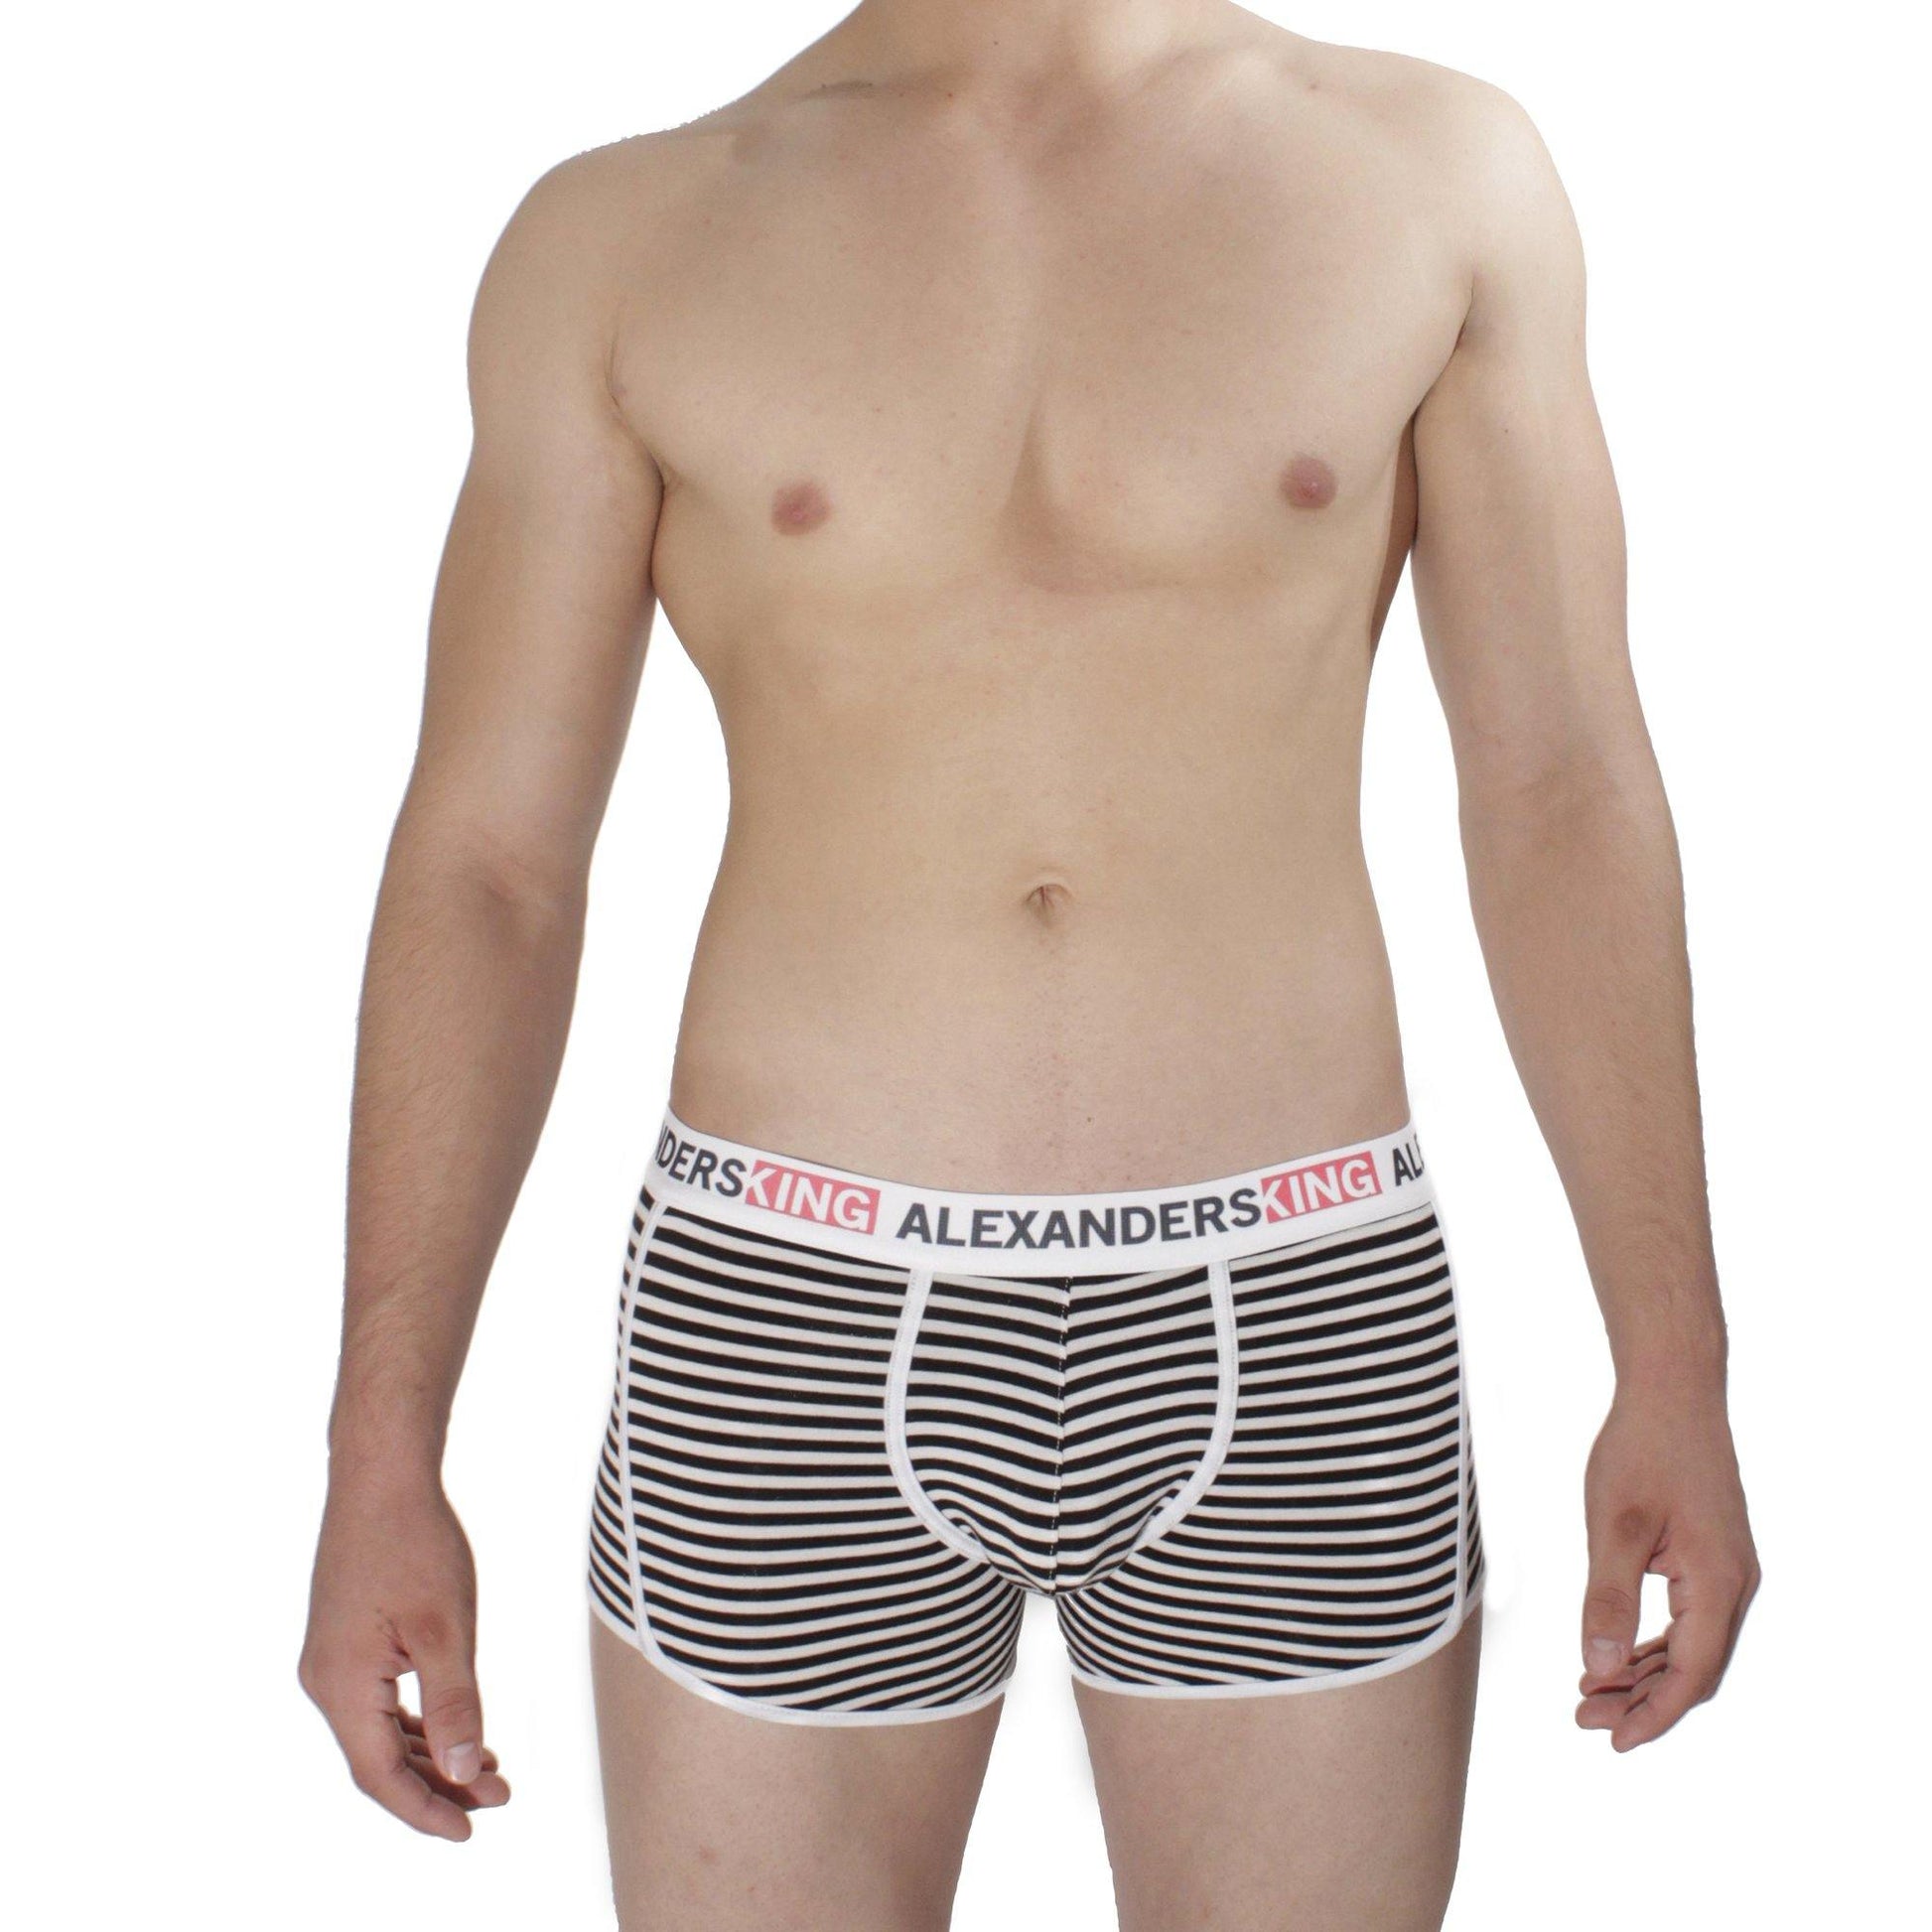 BP0019 - Horizontes DÌ?a y noche Comfort - AlexandersKing Underwear